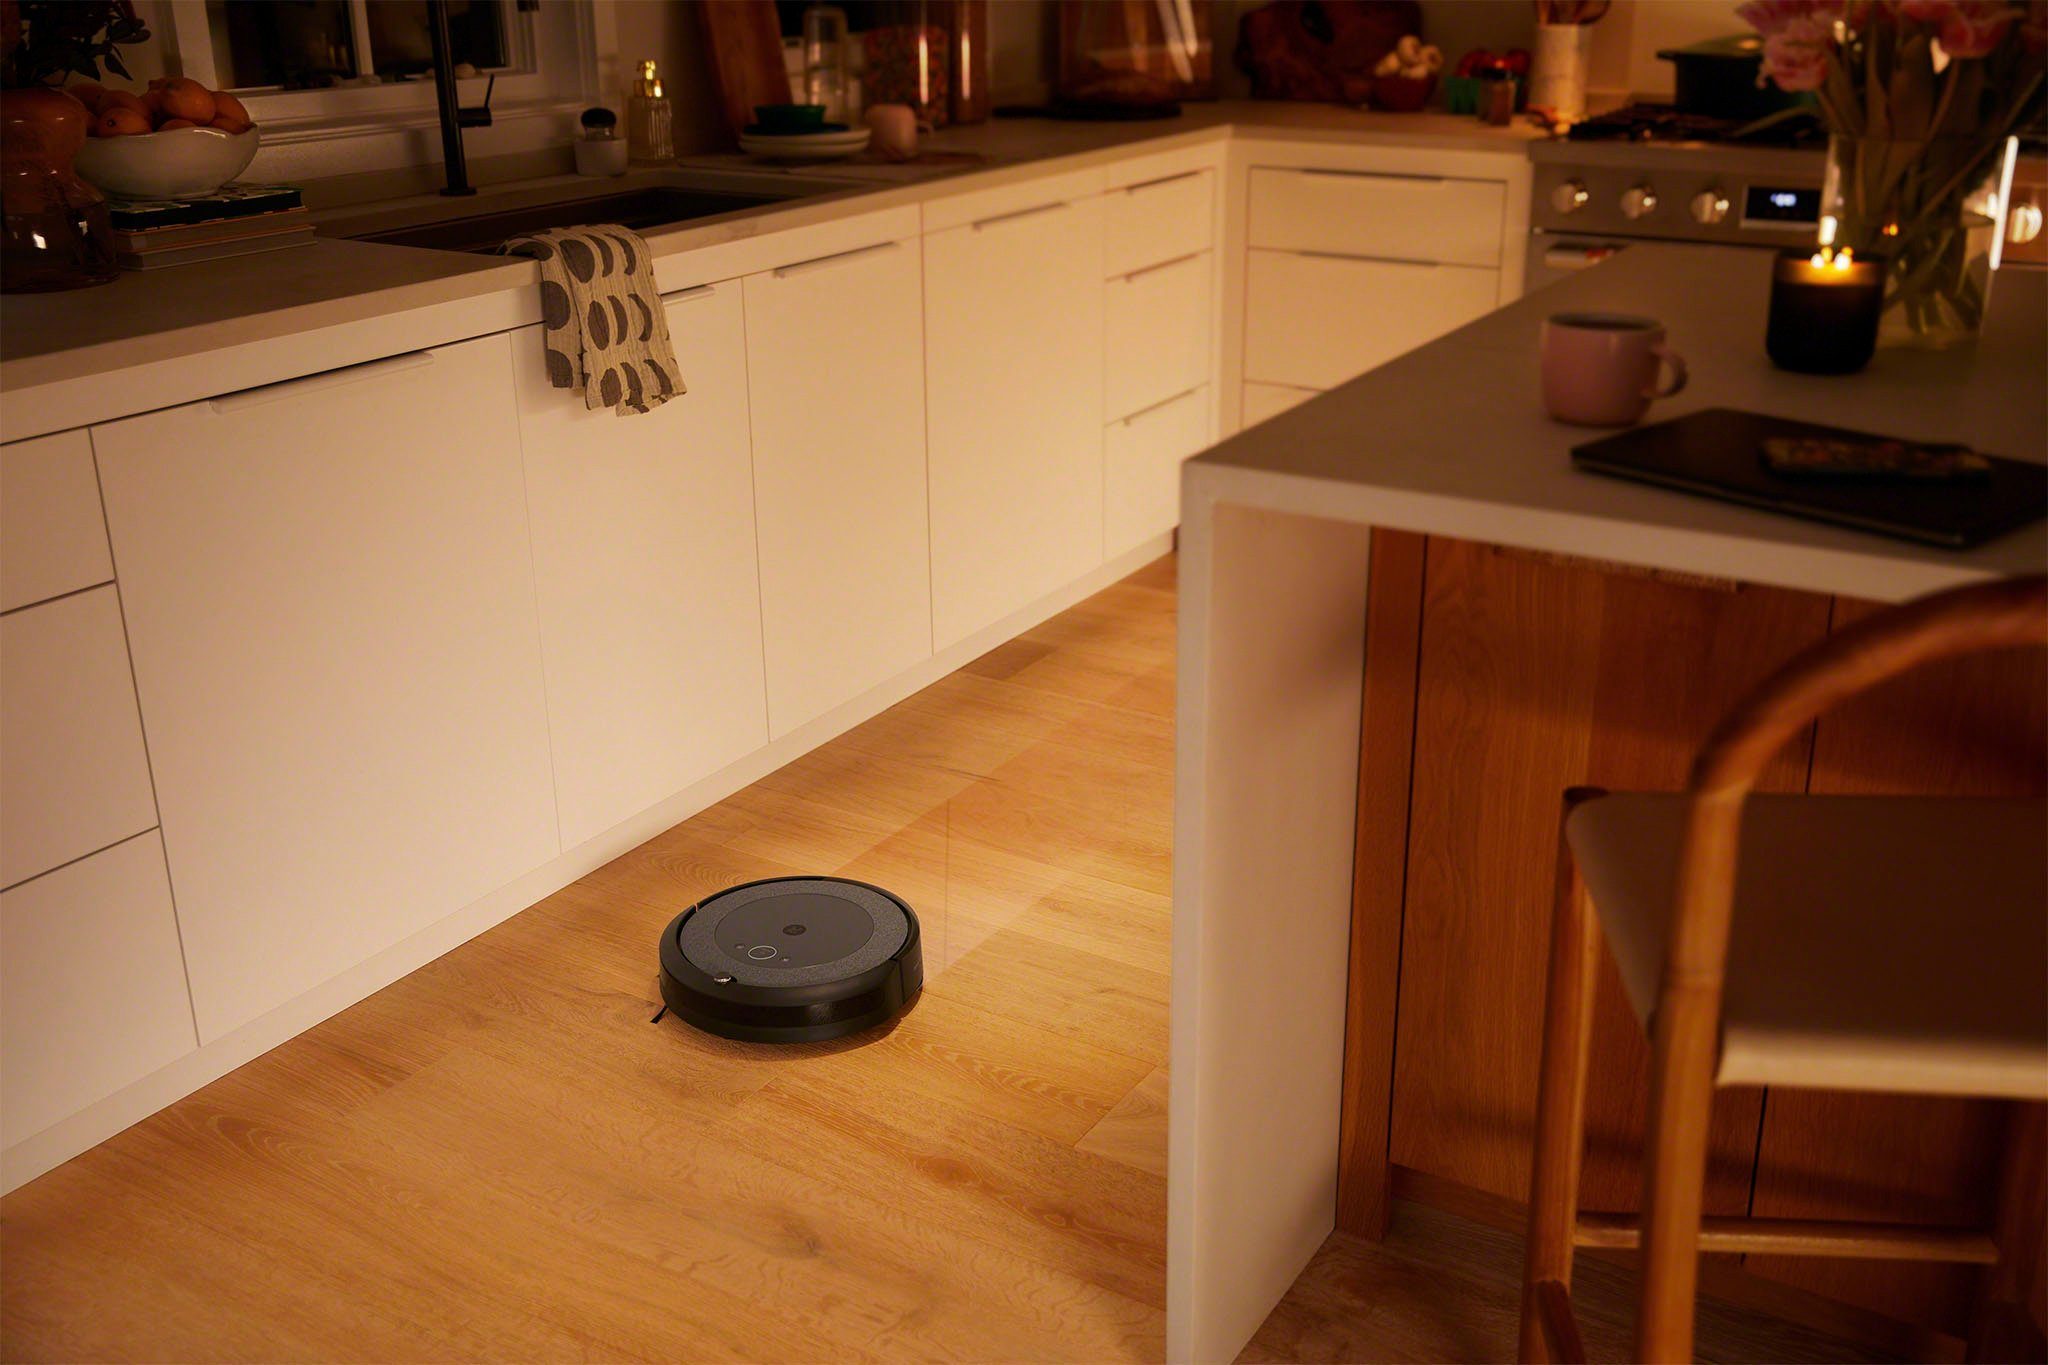 iRobot Combo Roomba Saugroboter i5+ (i5578)